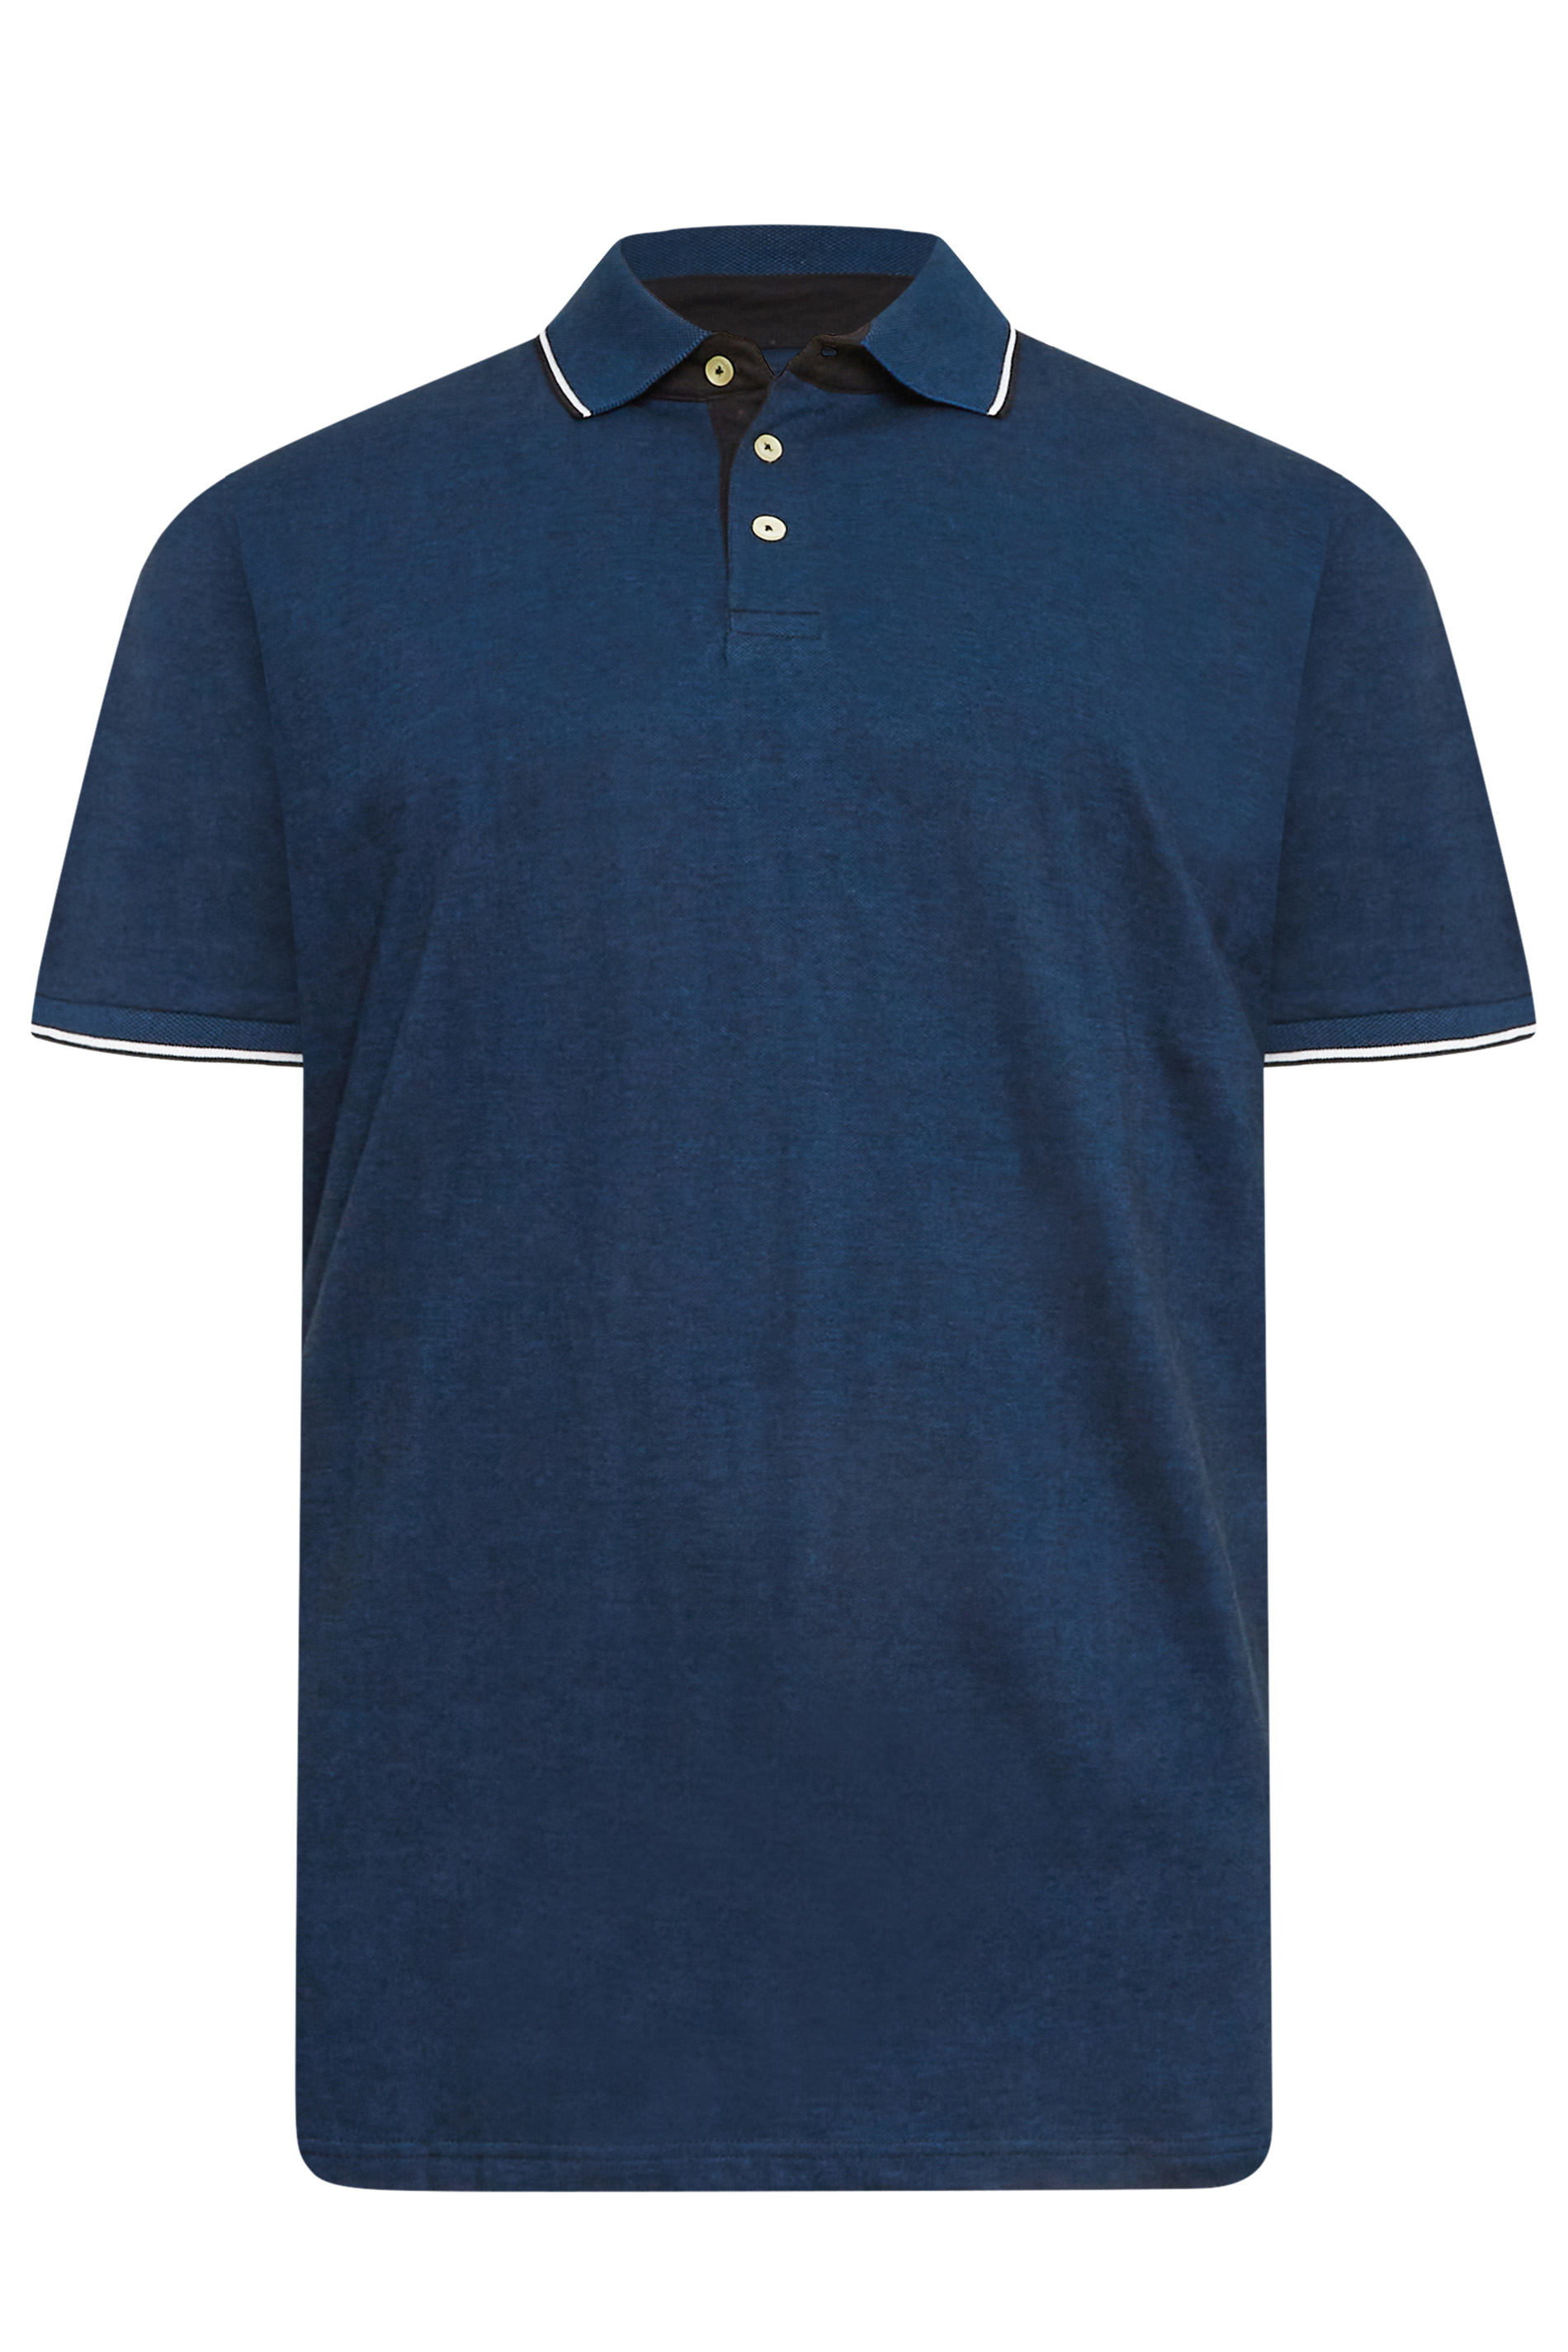 BONDELID BRANDON POLO SHIRT - Long sleeved top - navy stripe/blue